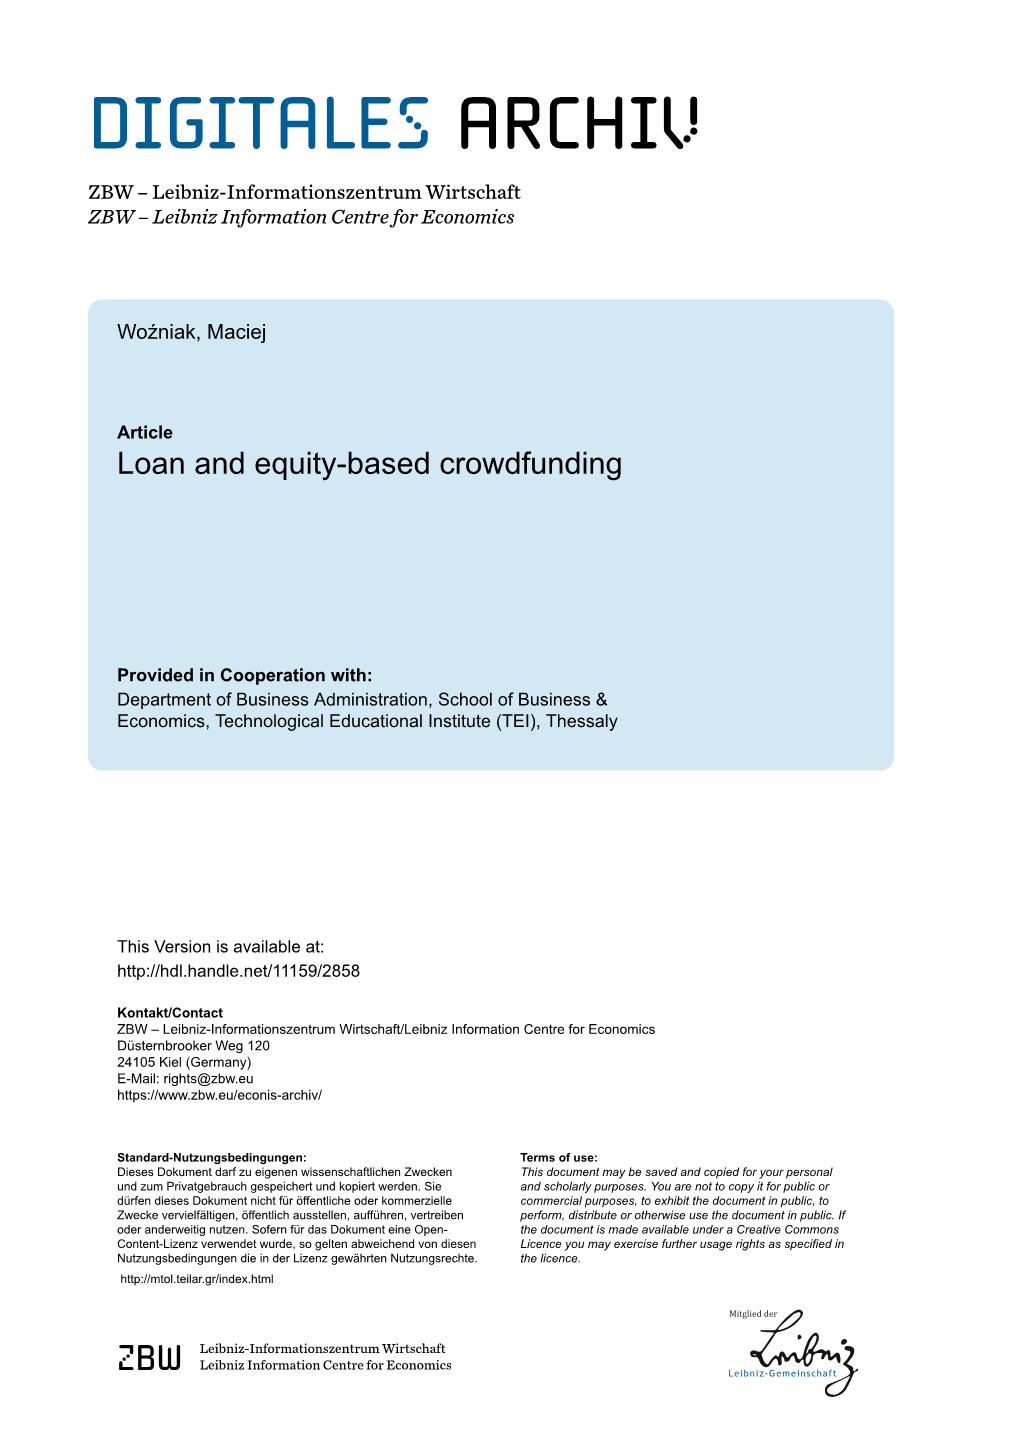 Loan and Equity-Based Crowdfunding